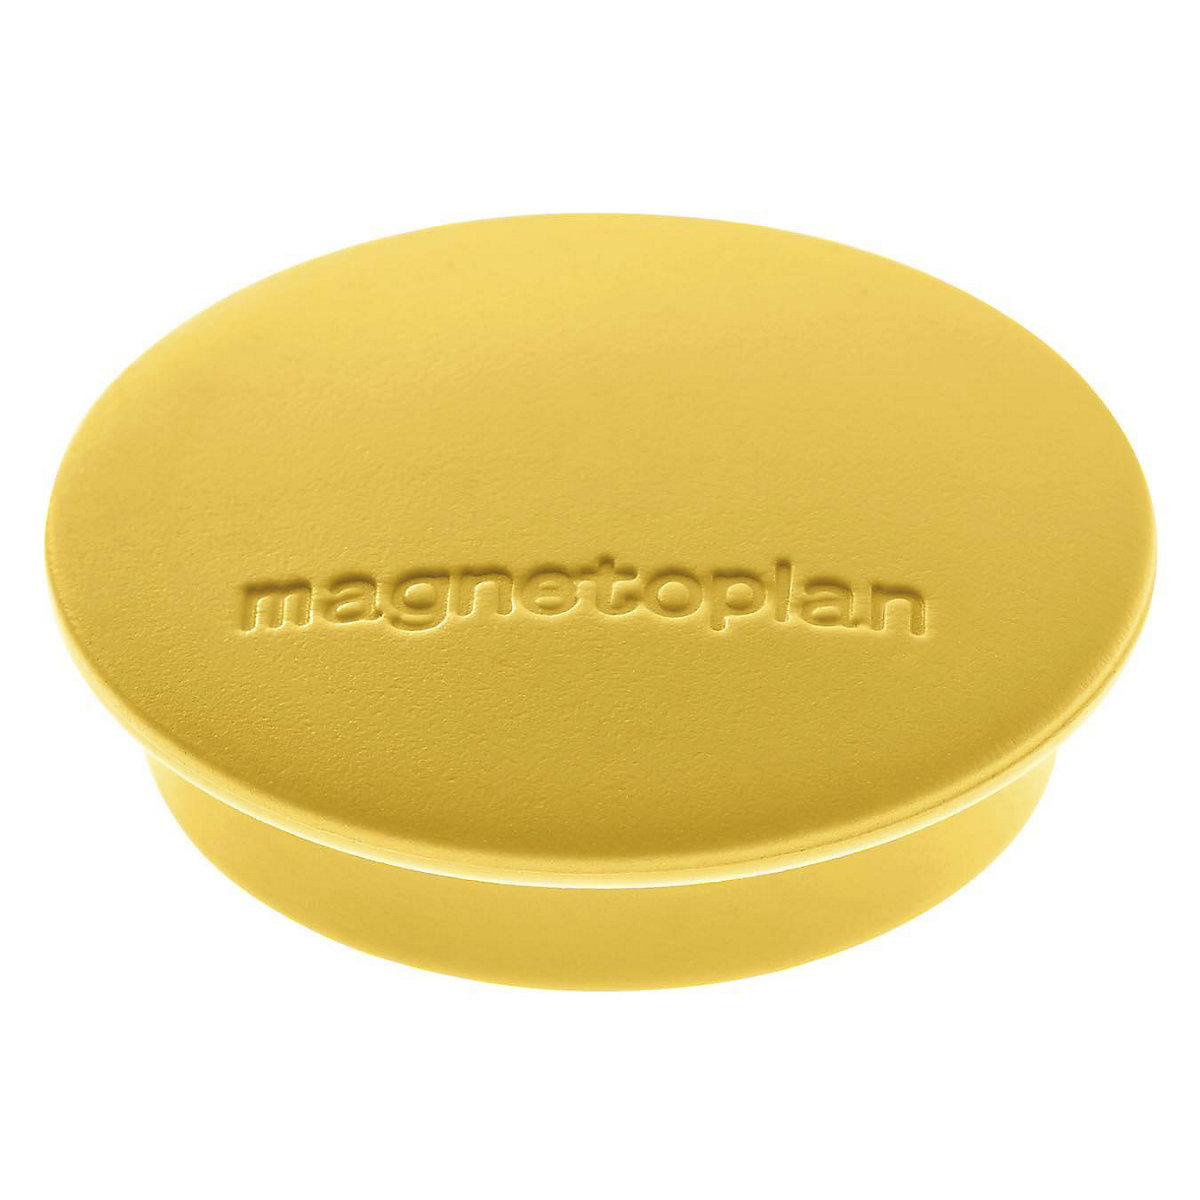 DISCOFIX JUNIOR magnet – magnetoplan, Ø 34 mm, pack of 60, yellow-5